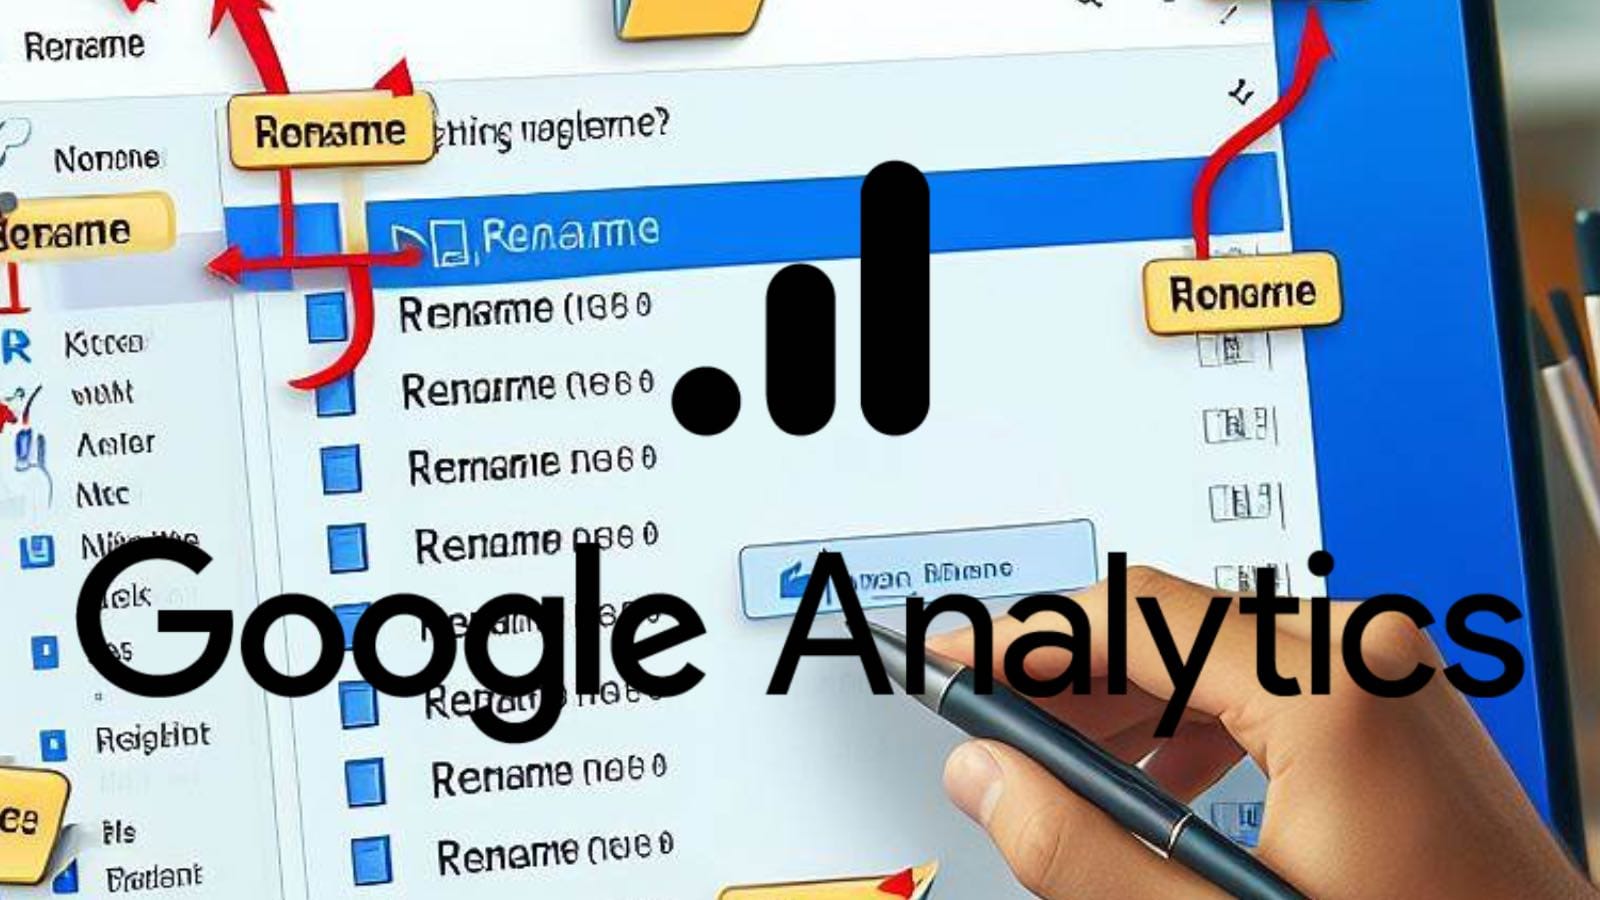 Renaming events in Google Analytics 4